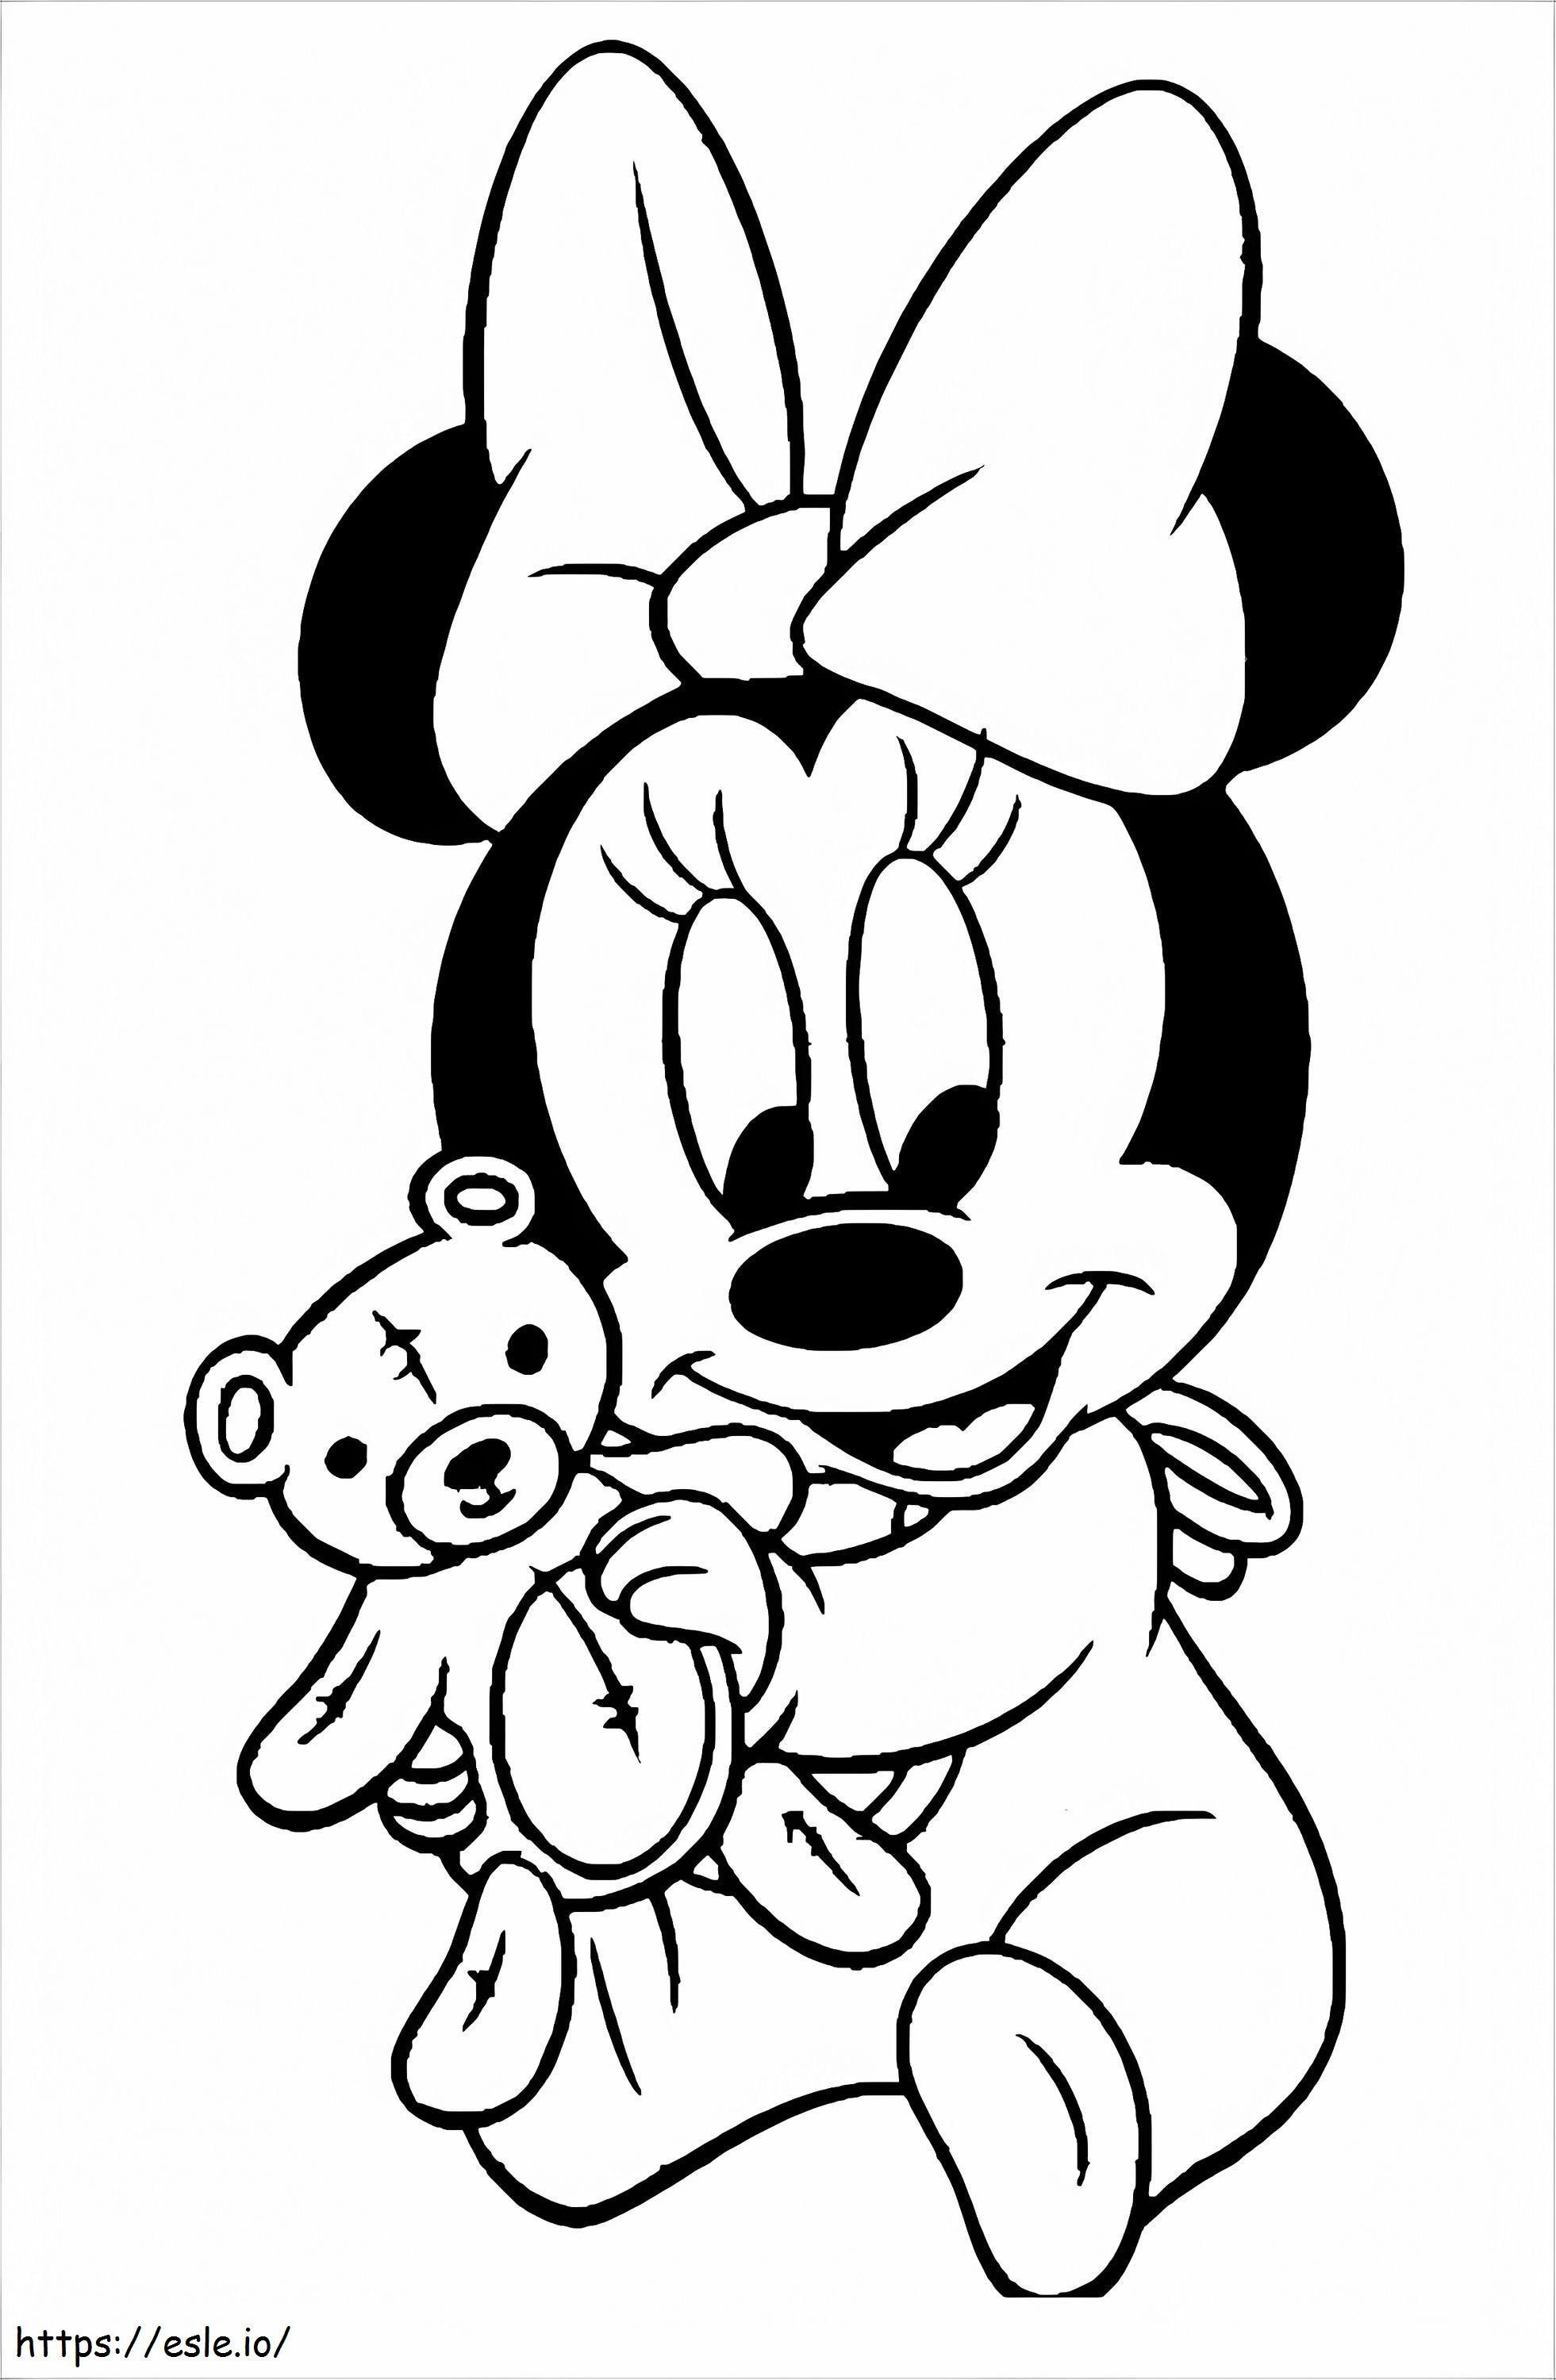 1532138954 Minnie Mouse Dengan Teddy A4 Gambar Mewarnai